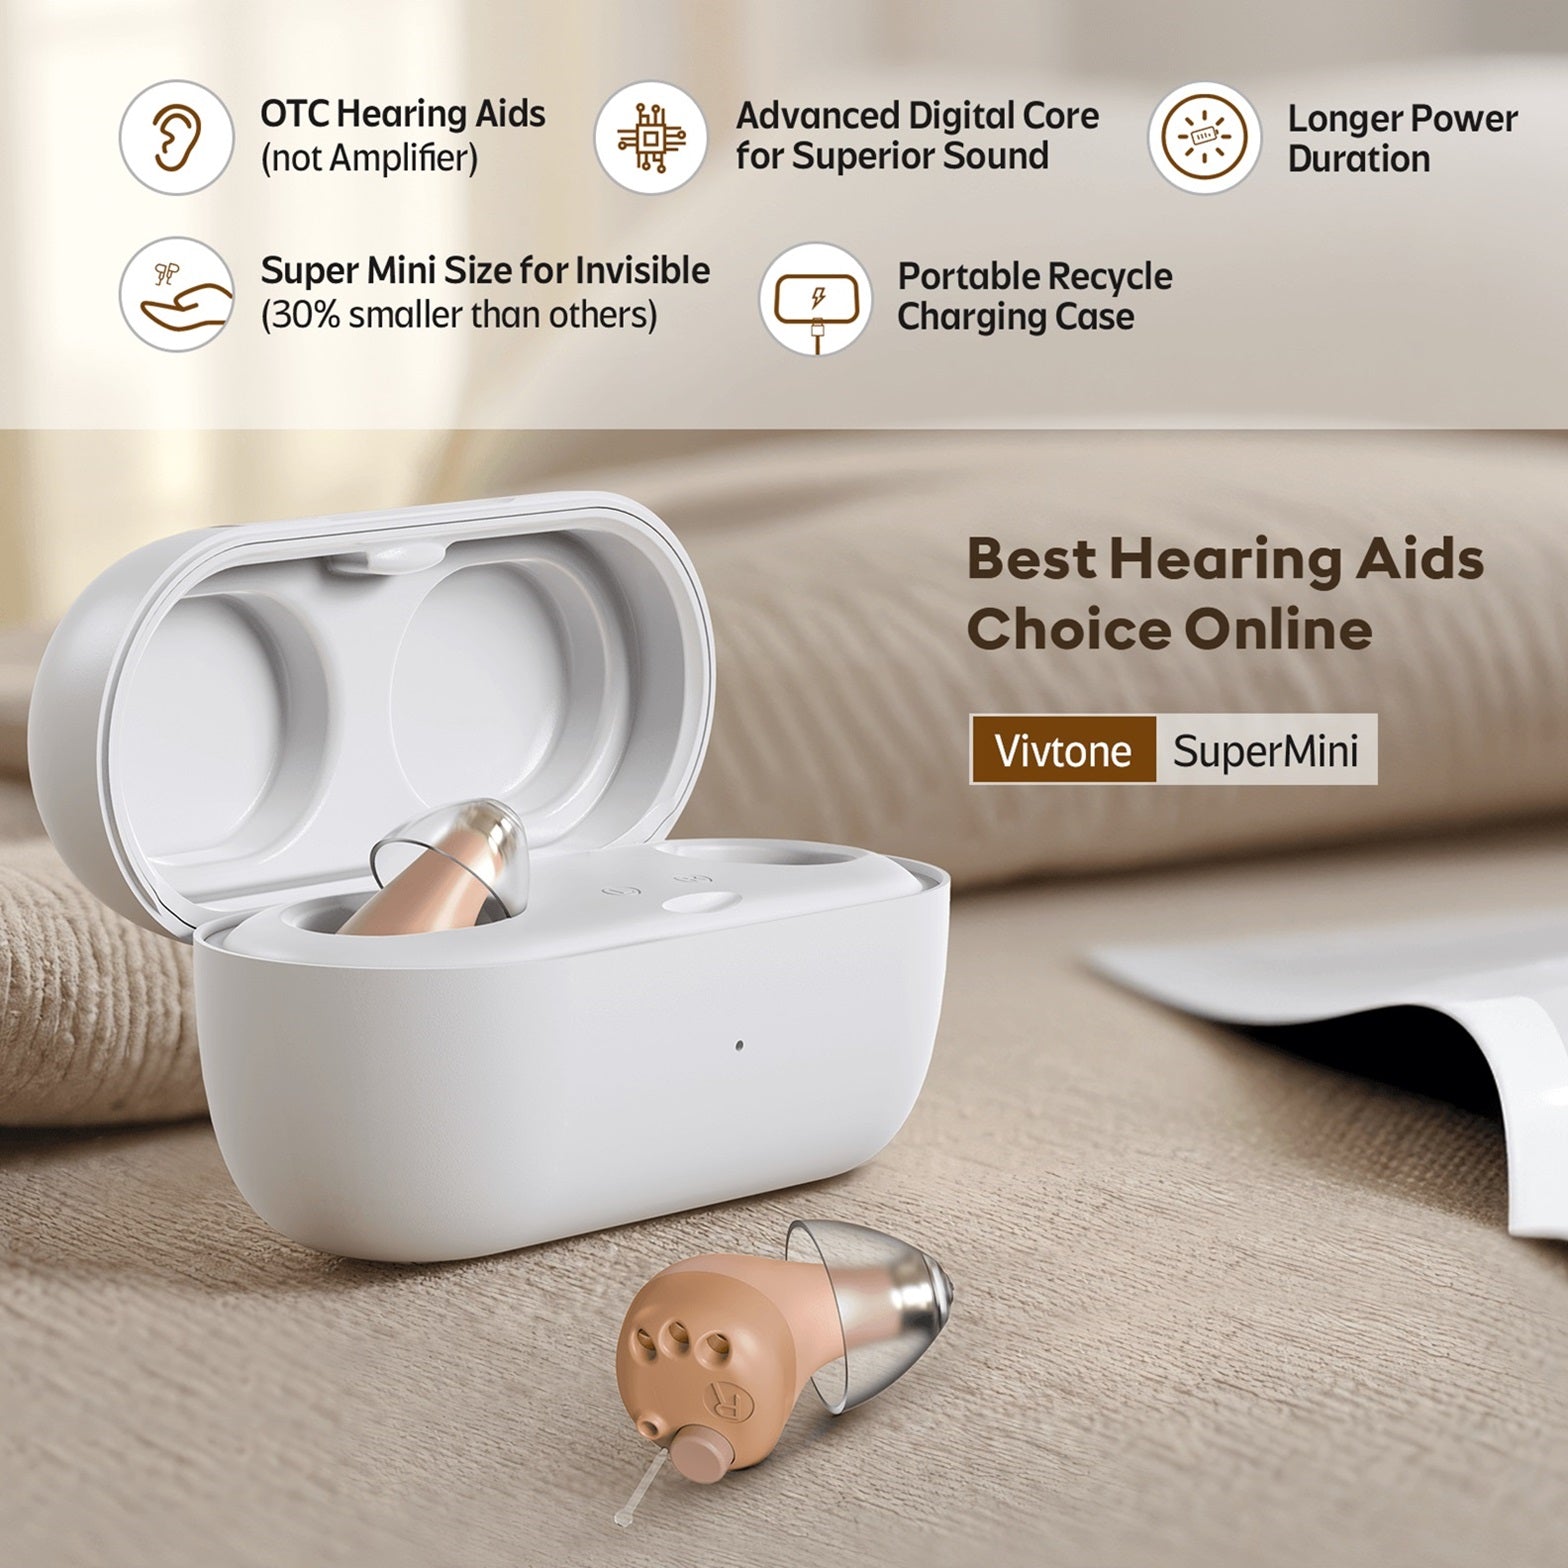 Vivtone Supermini-b2 CIC hearing aids